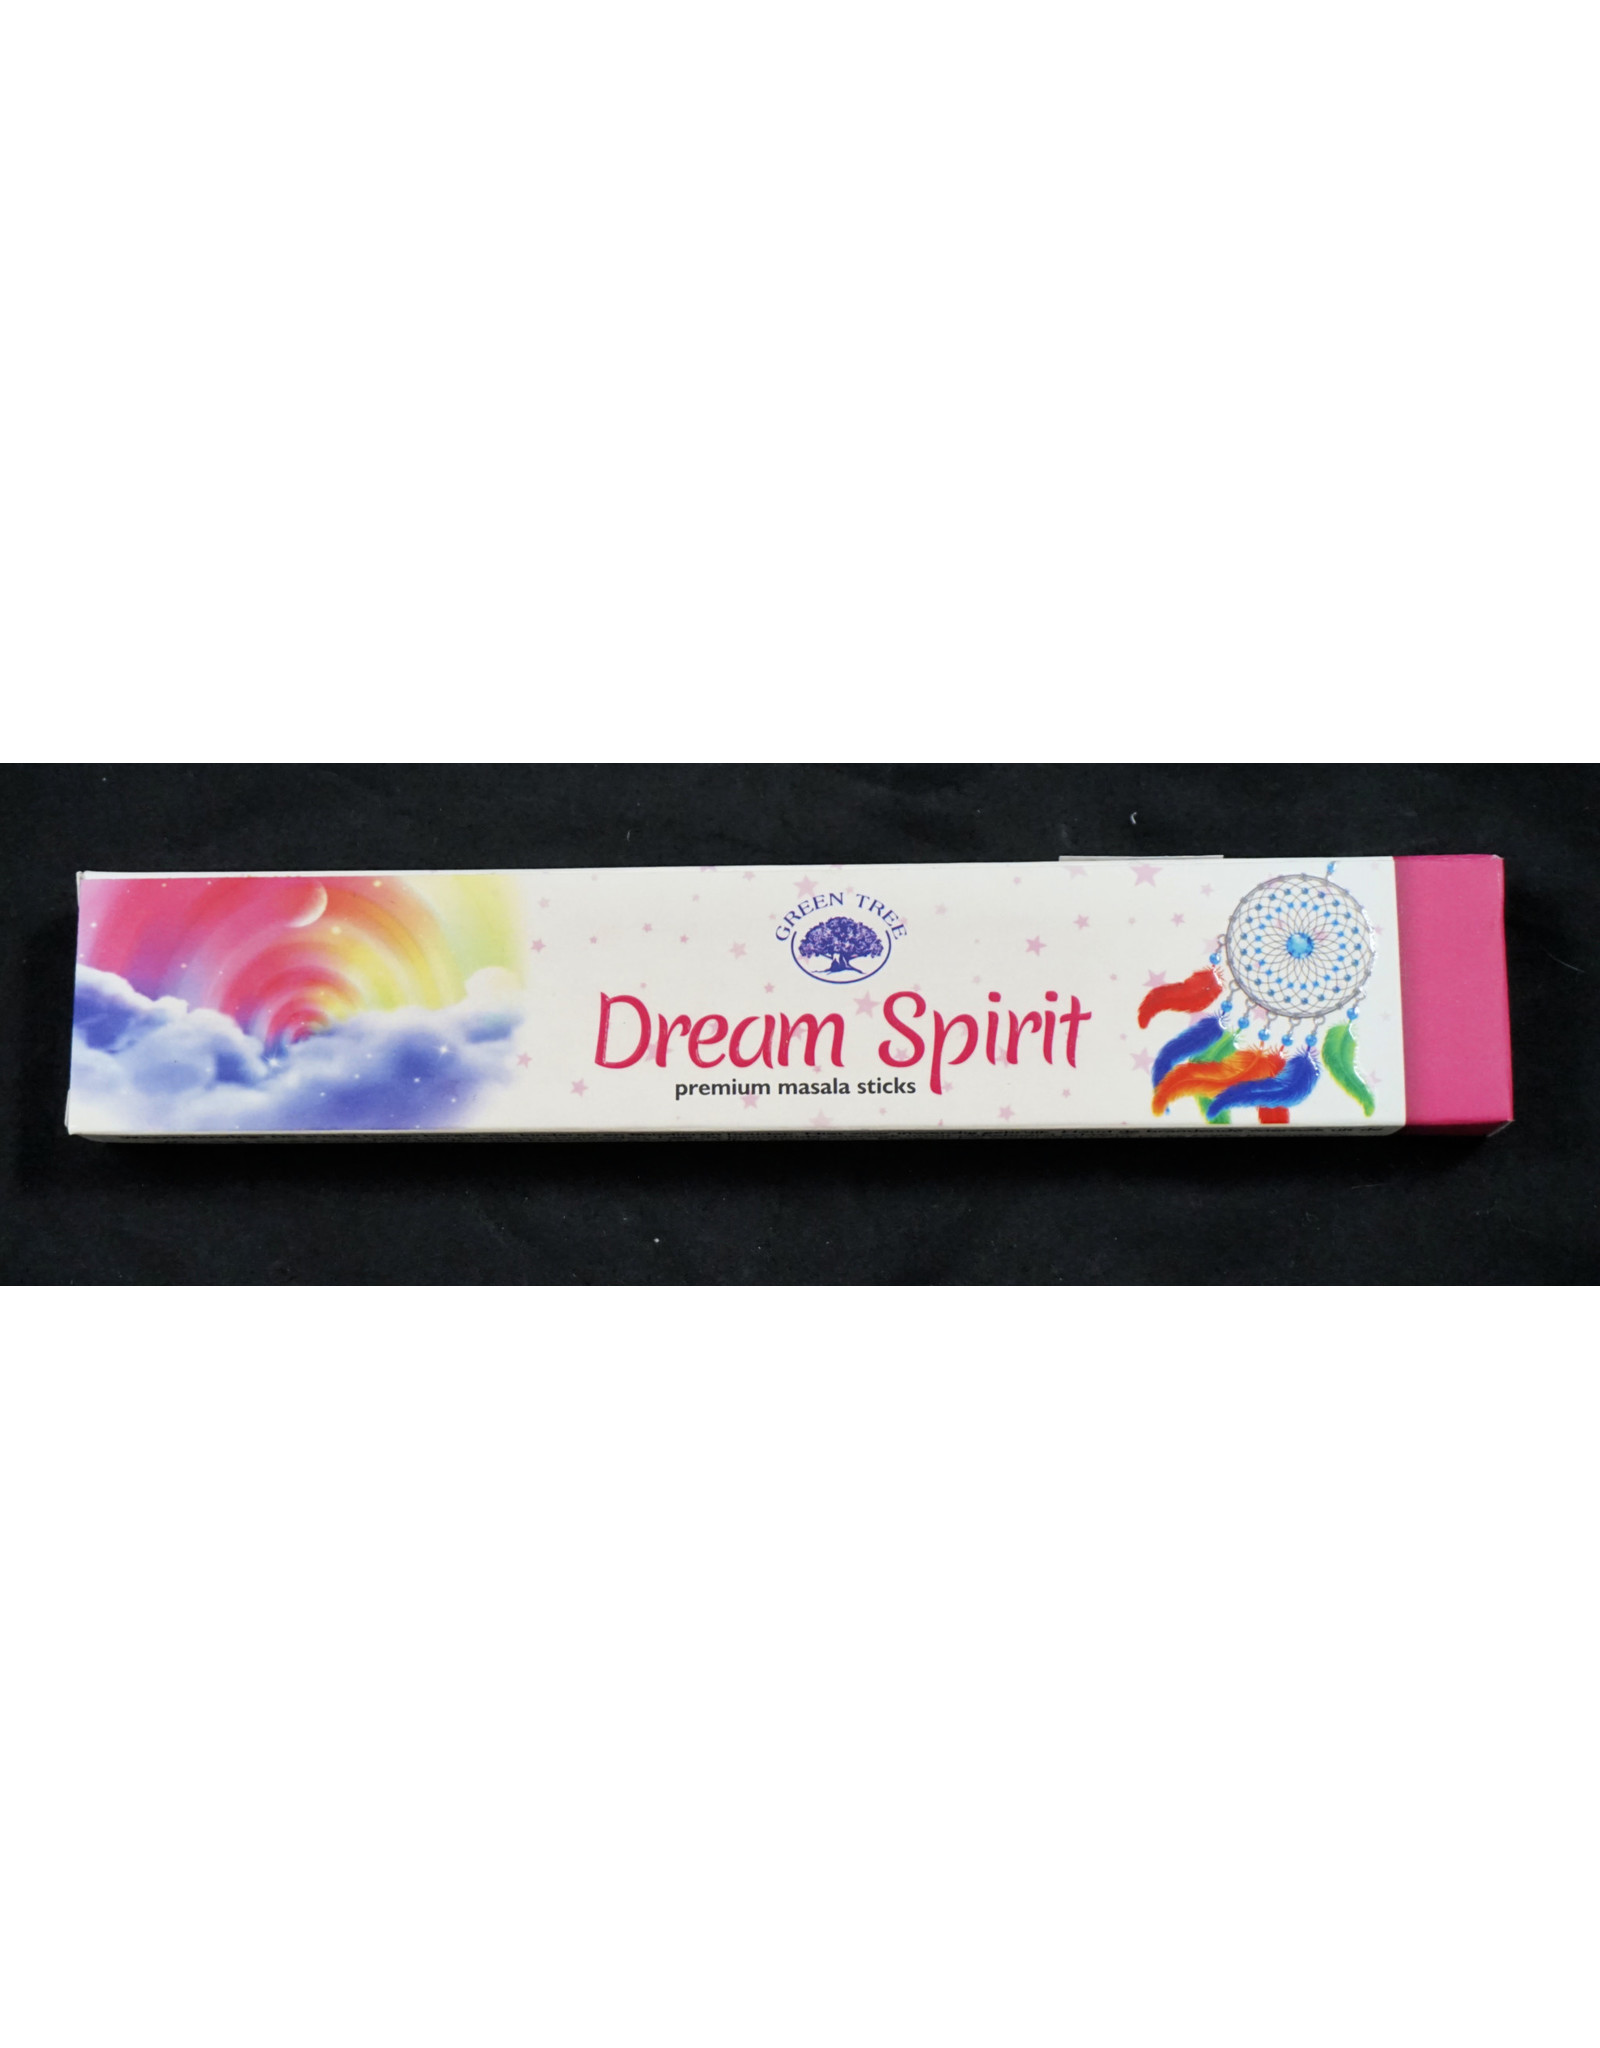 Green Tree Incense 15g - Dream Spirit